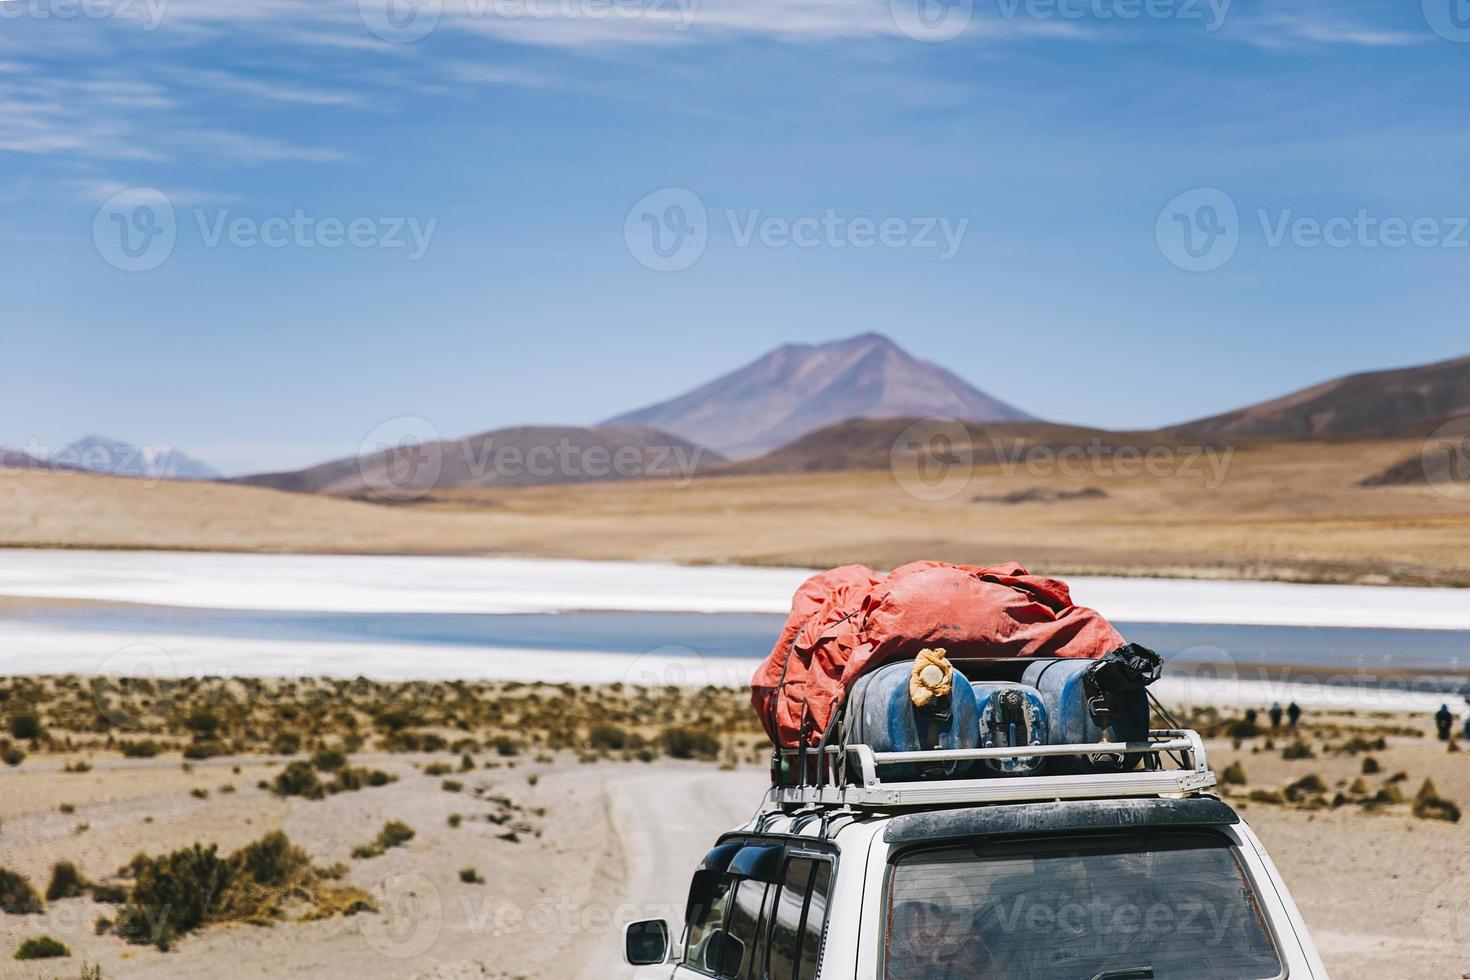 Dali Wüste in Bolivien foto